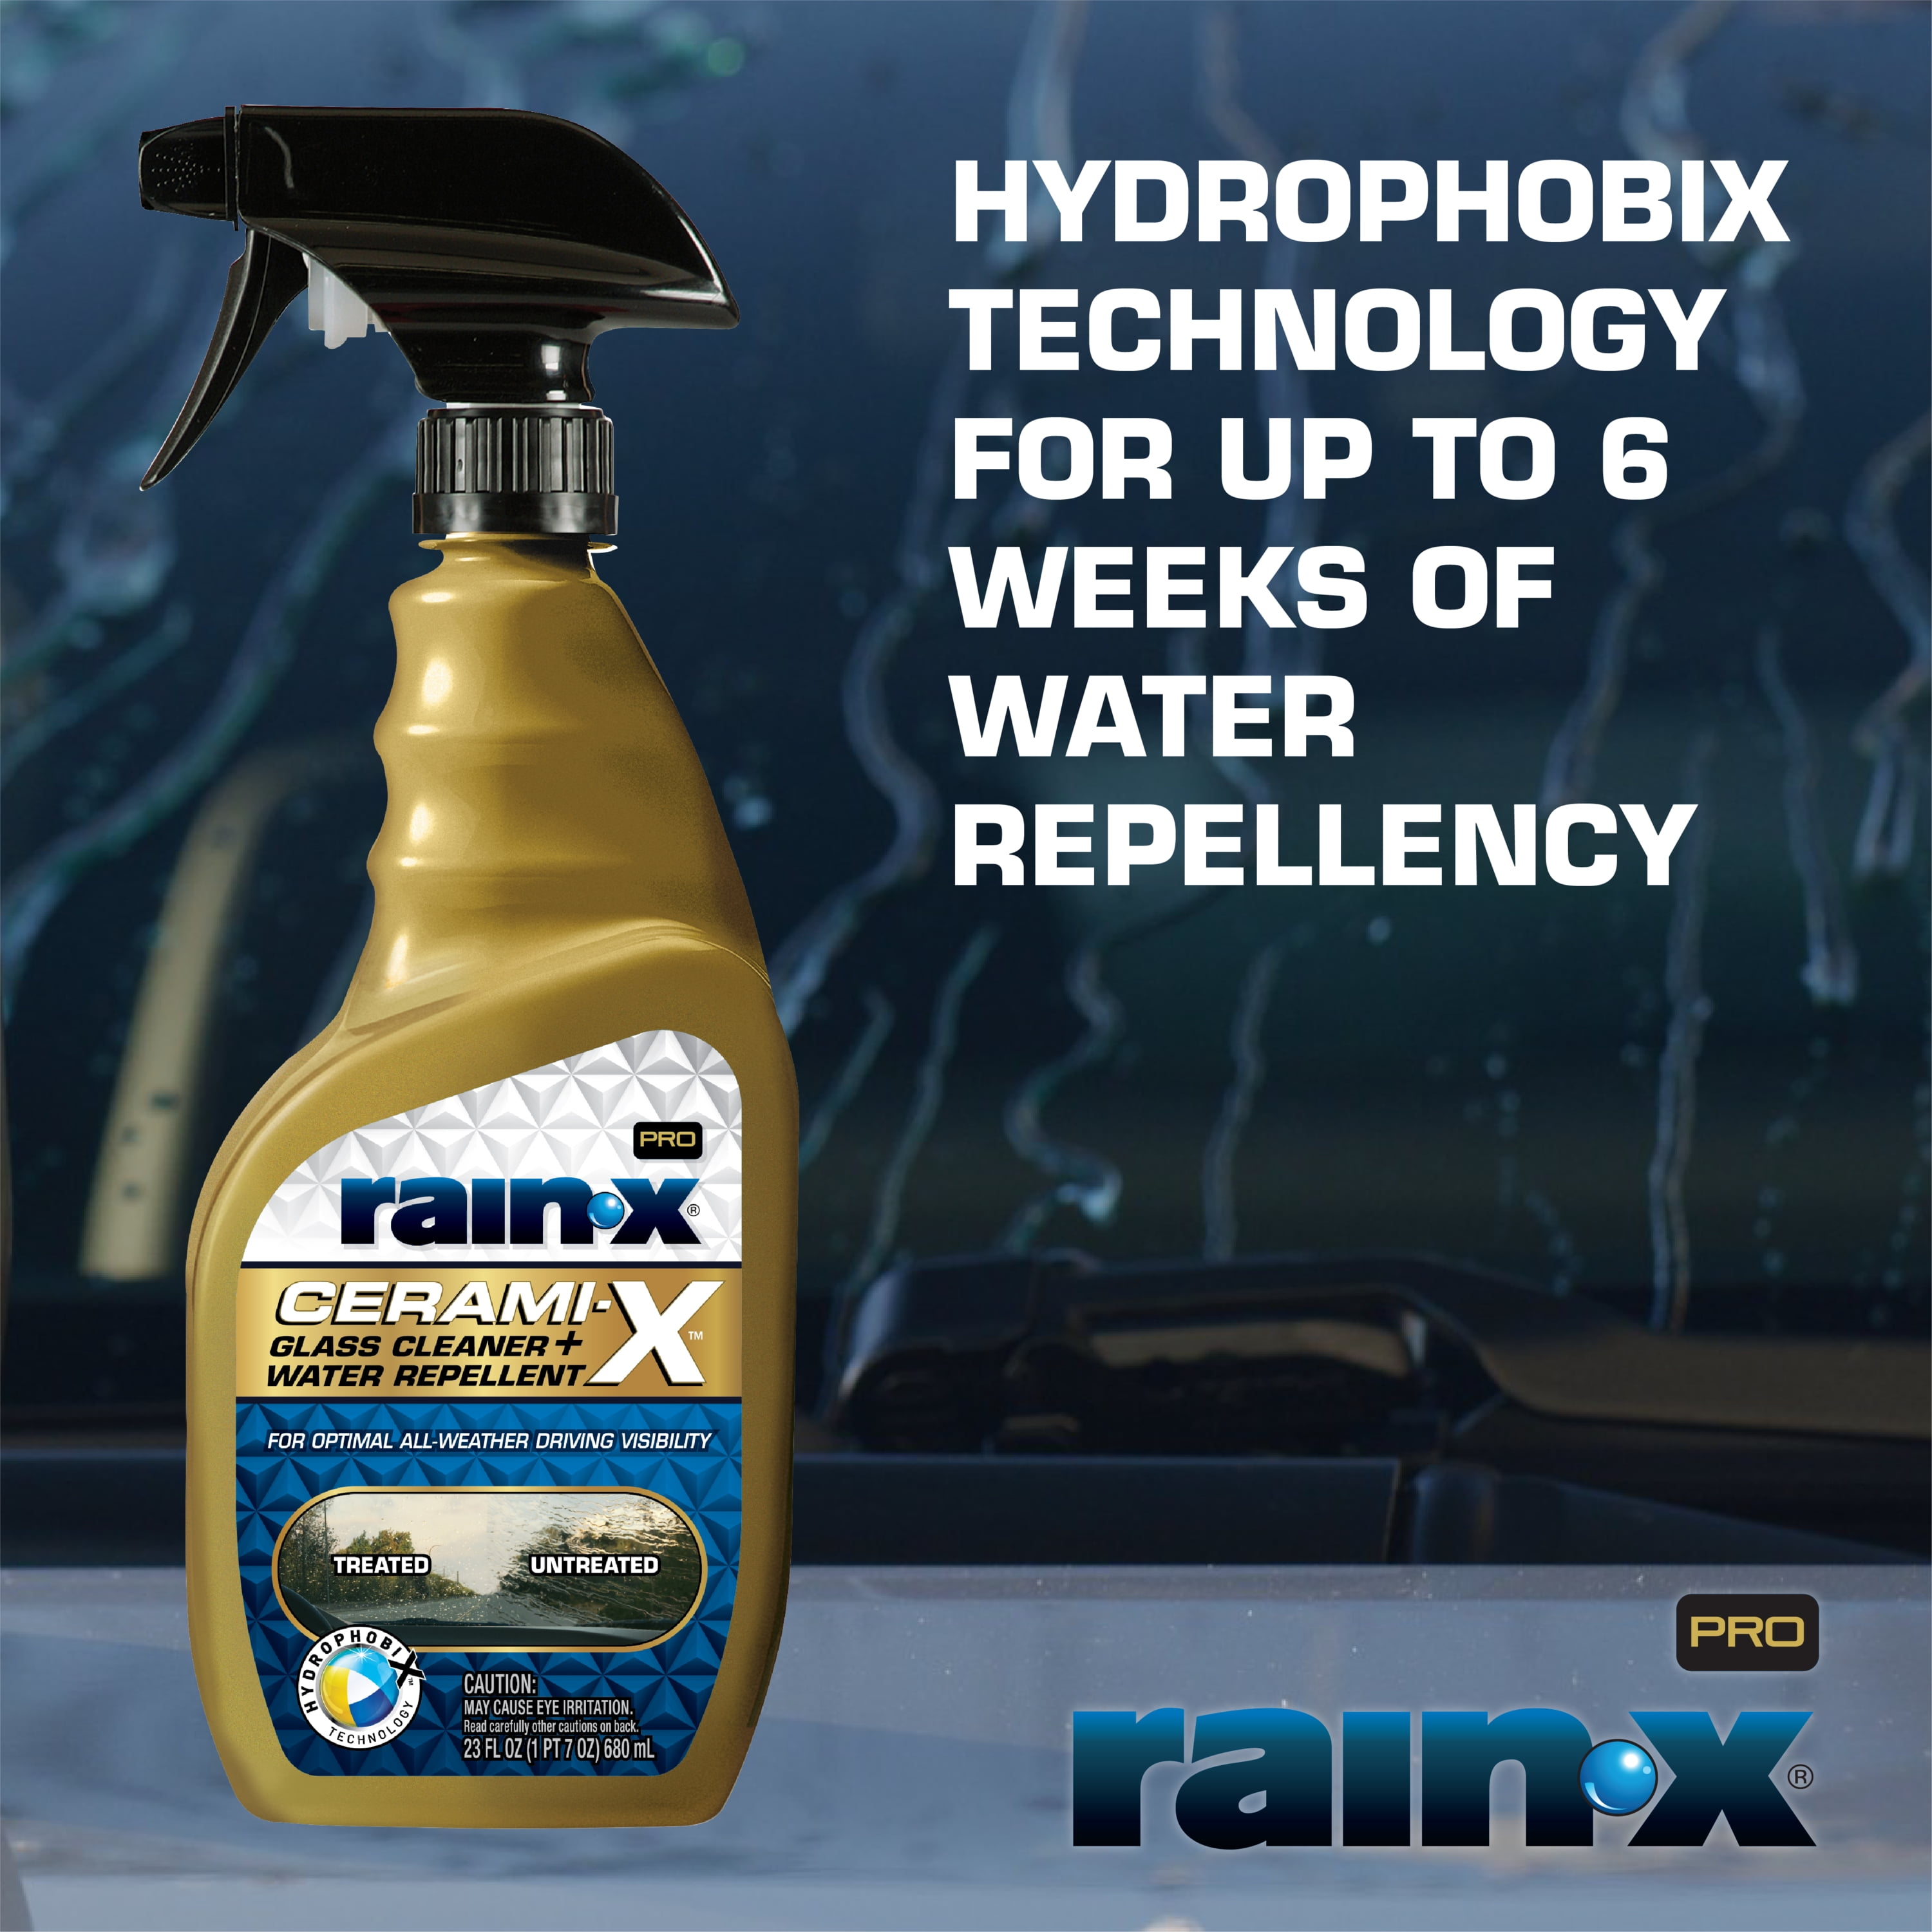 Rain-X Cerami-X 16-oz. Glass Cleaner + Water Repellent for $9 - 630178